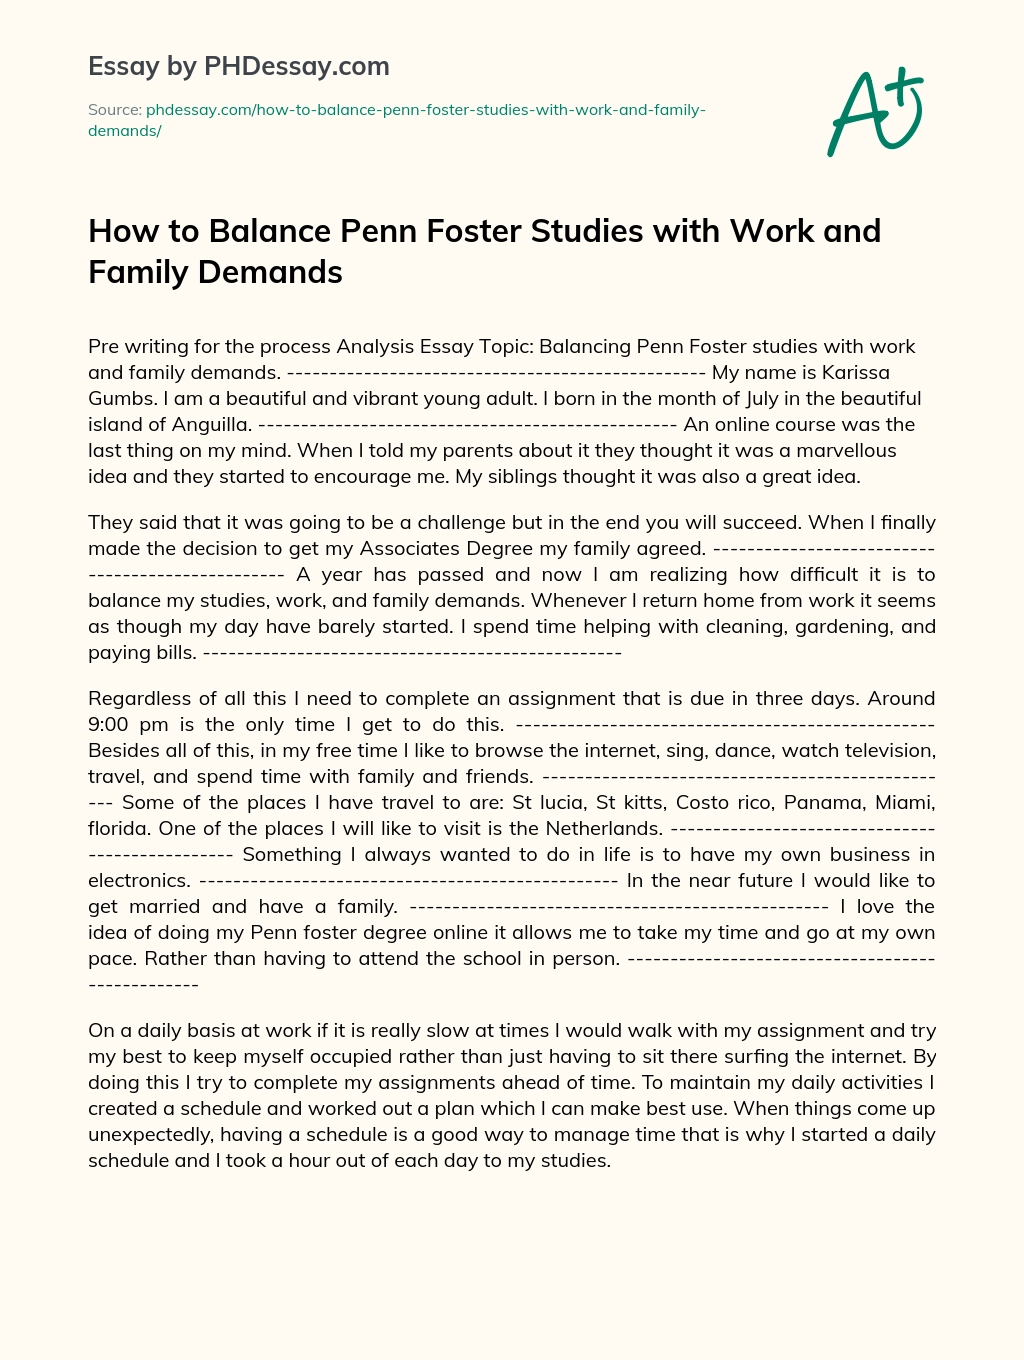 developing ideas essay writing penn foster